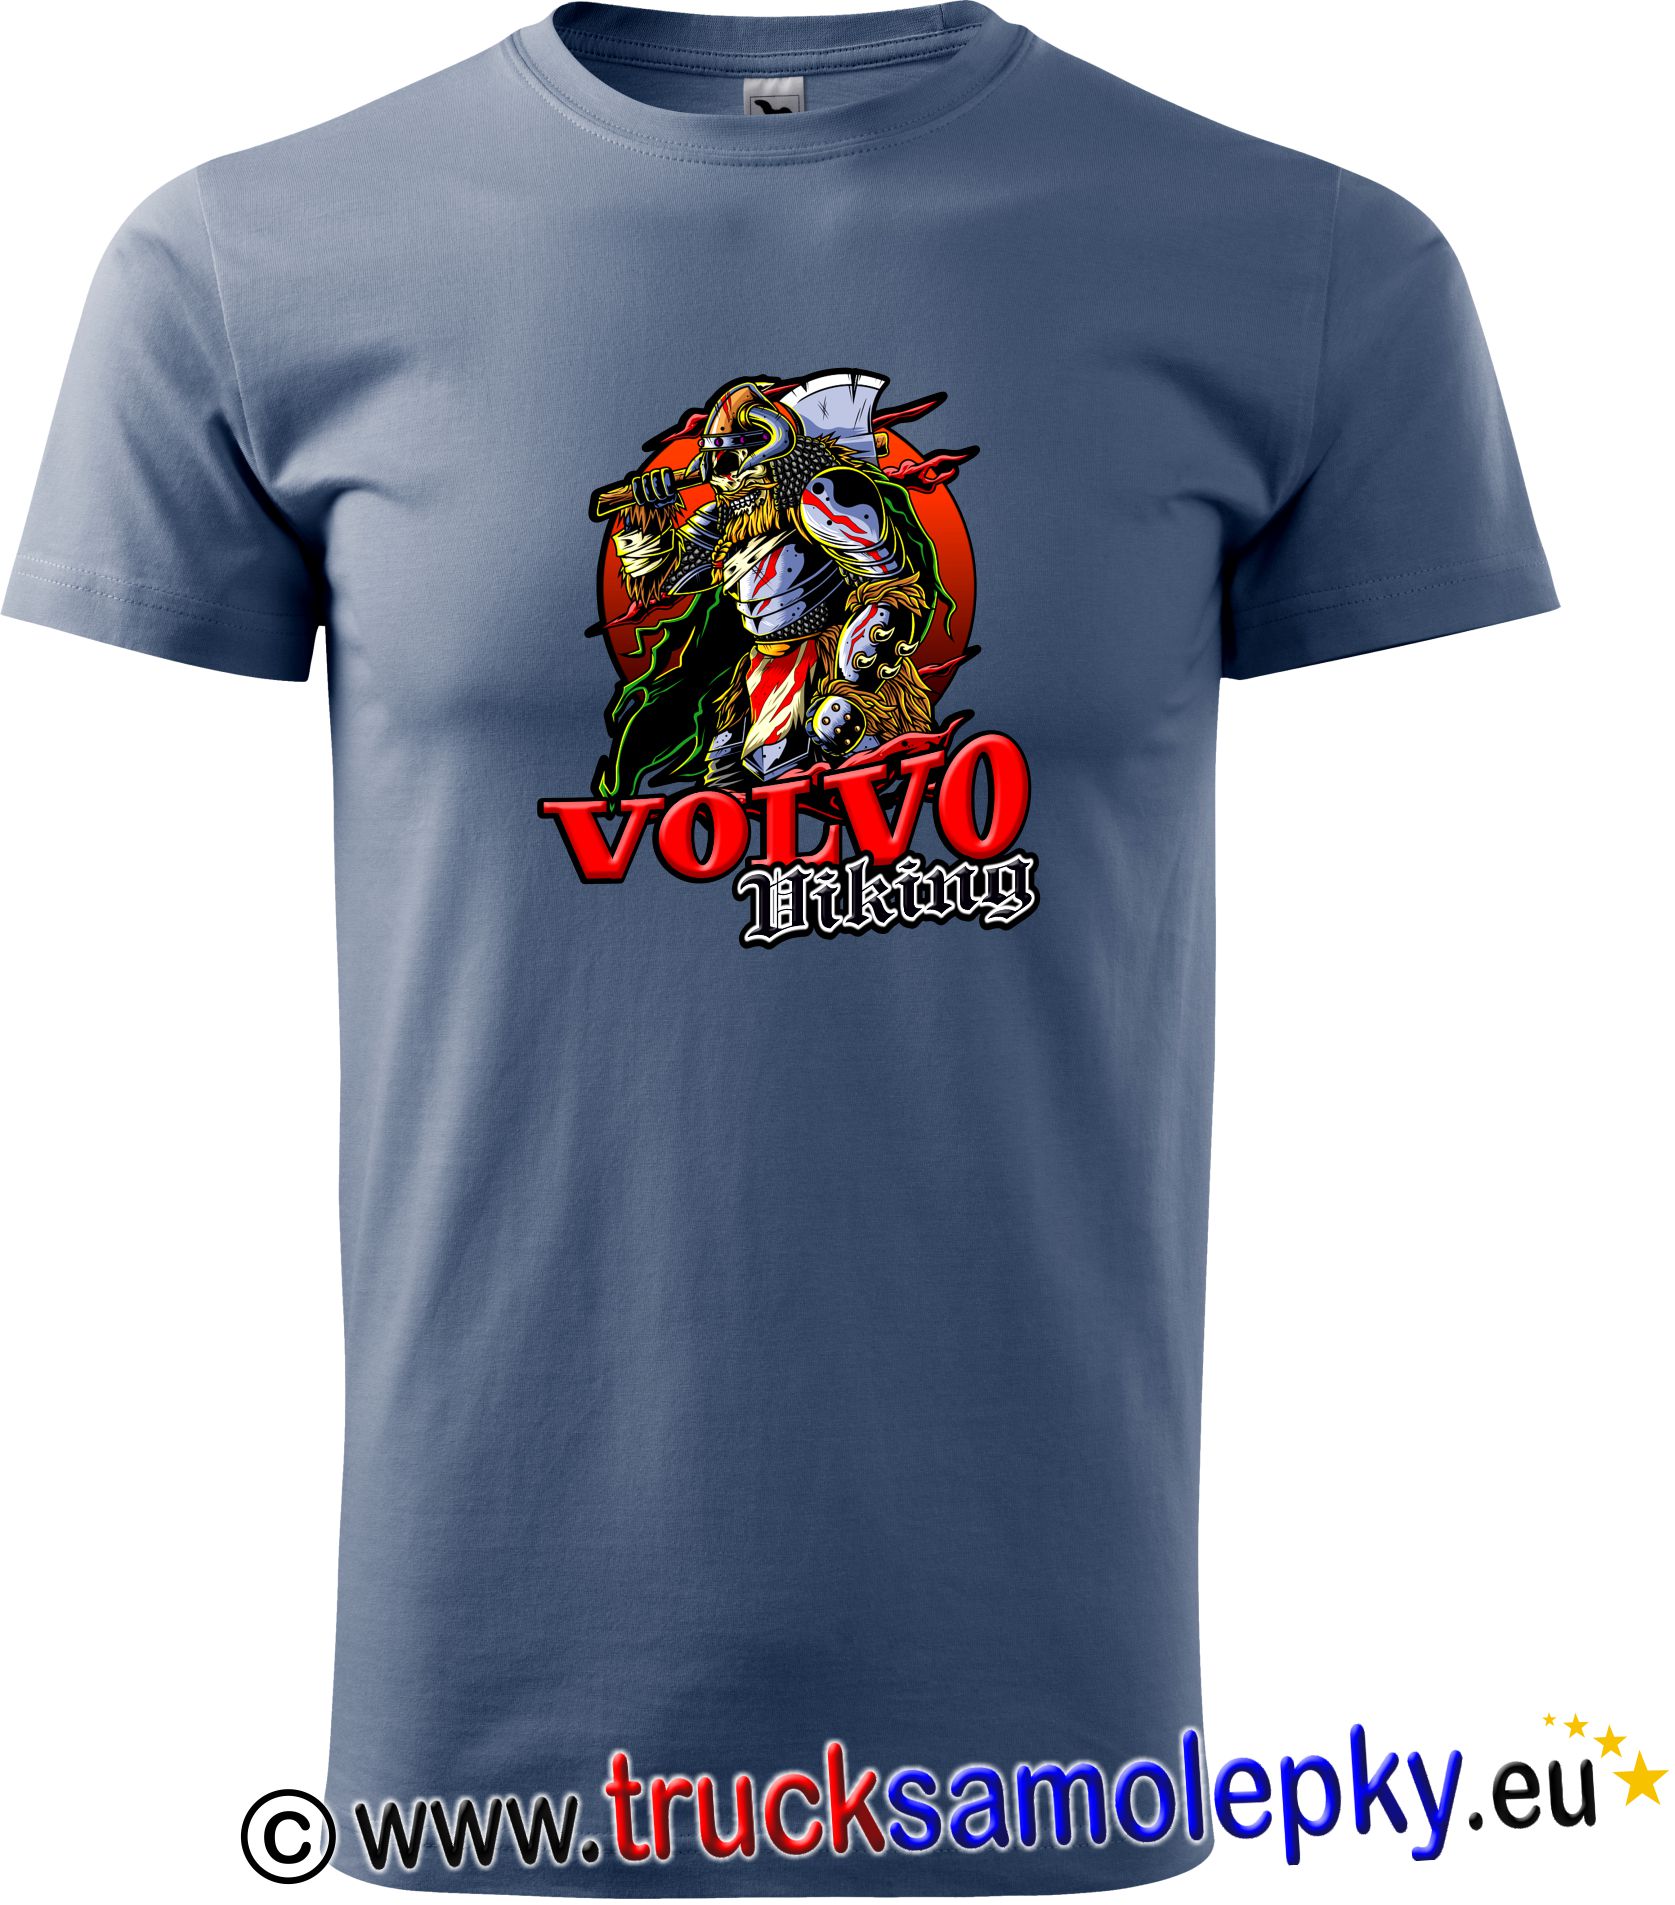 Truck tričko VOLVO Viking IV. v barvě denim